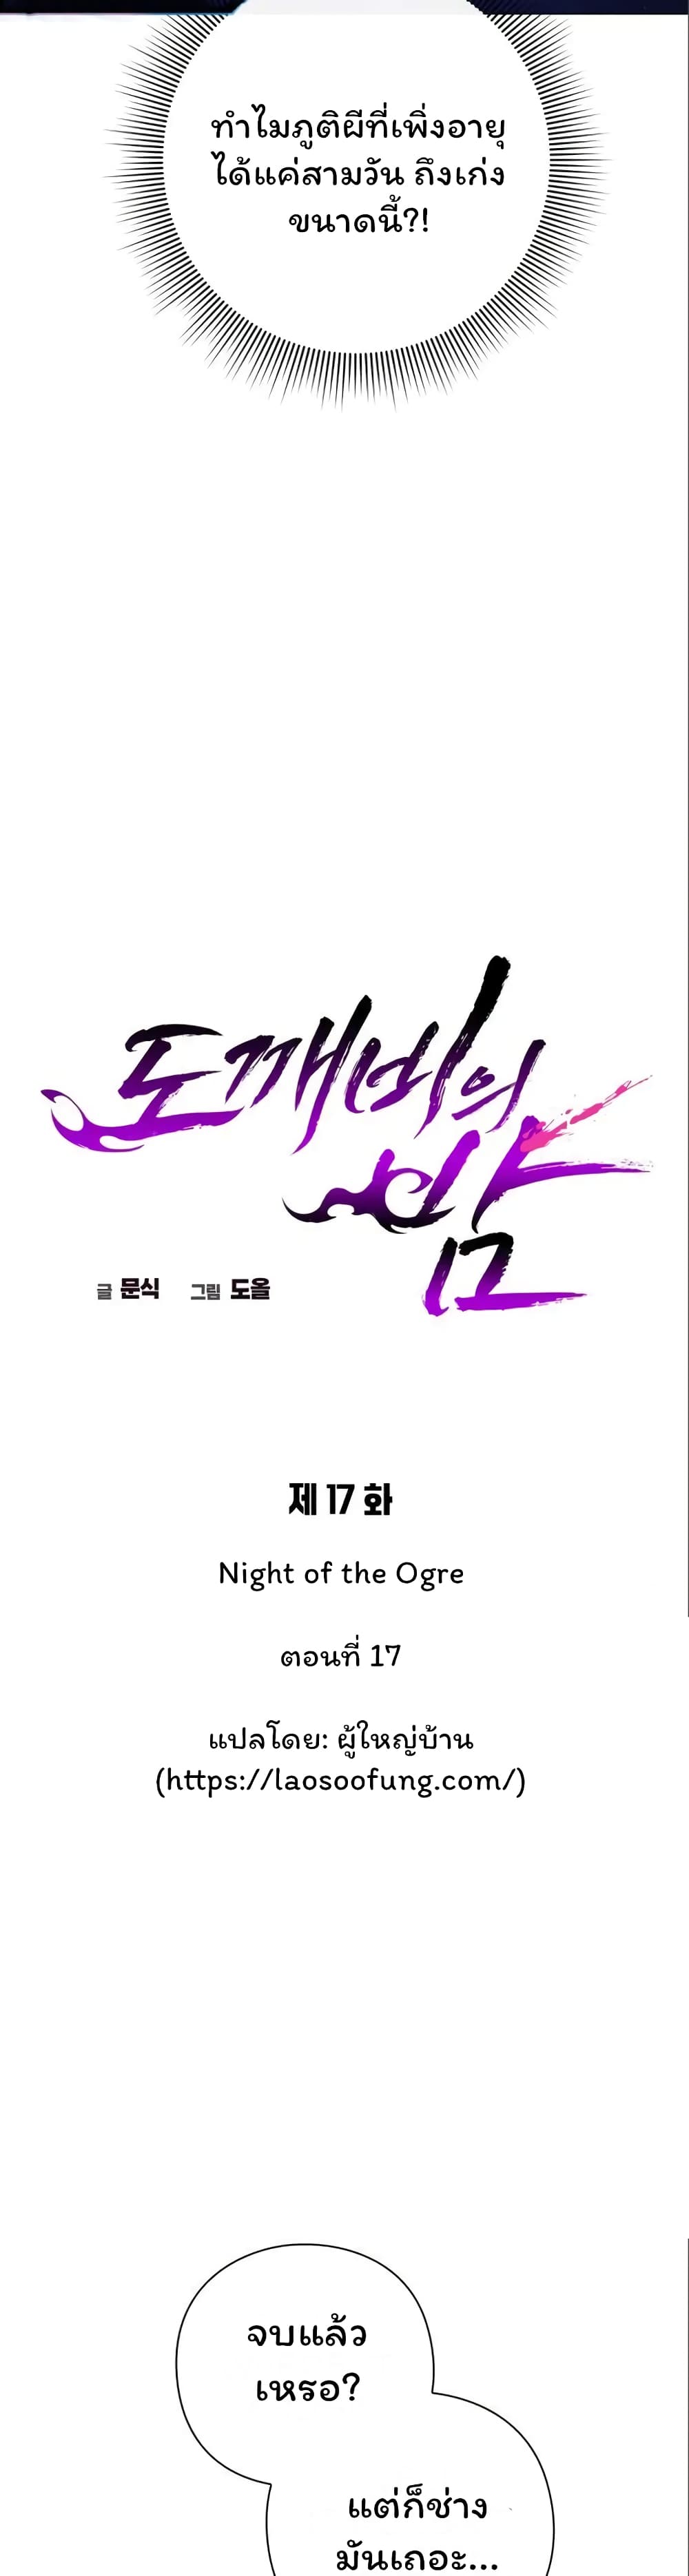 Night of the Ogre 17-17